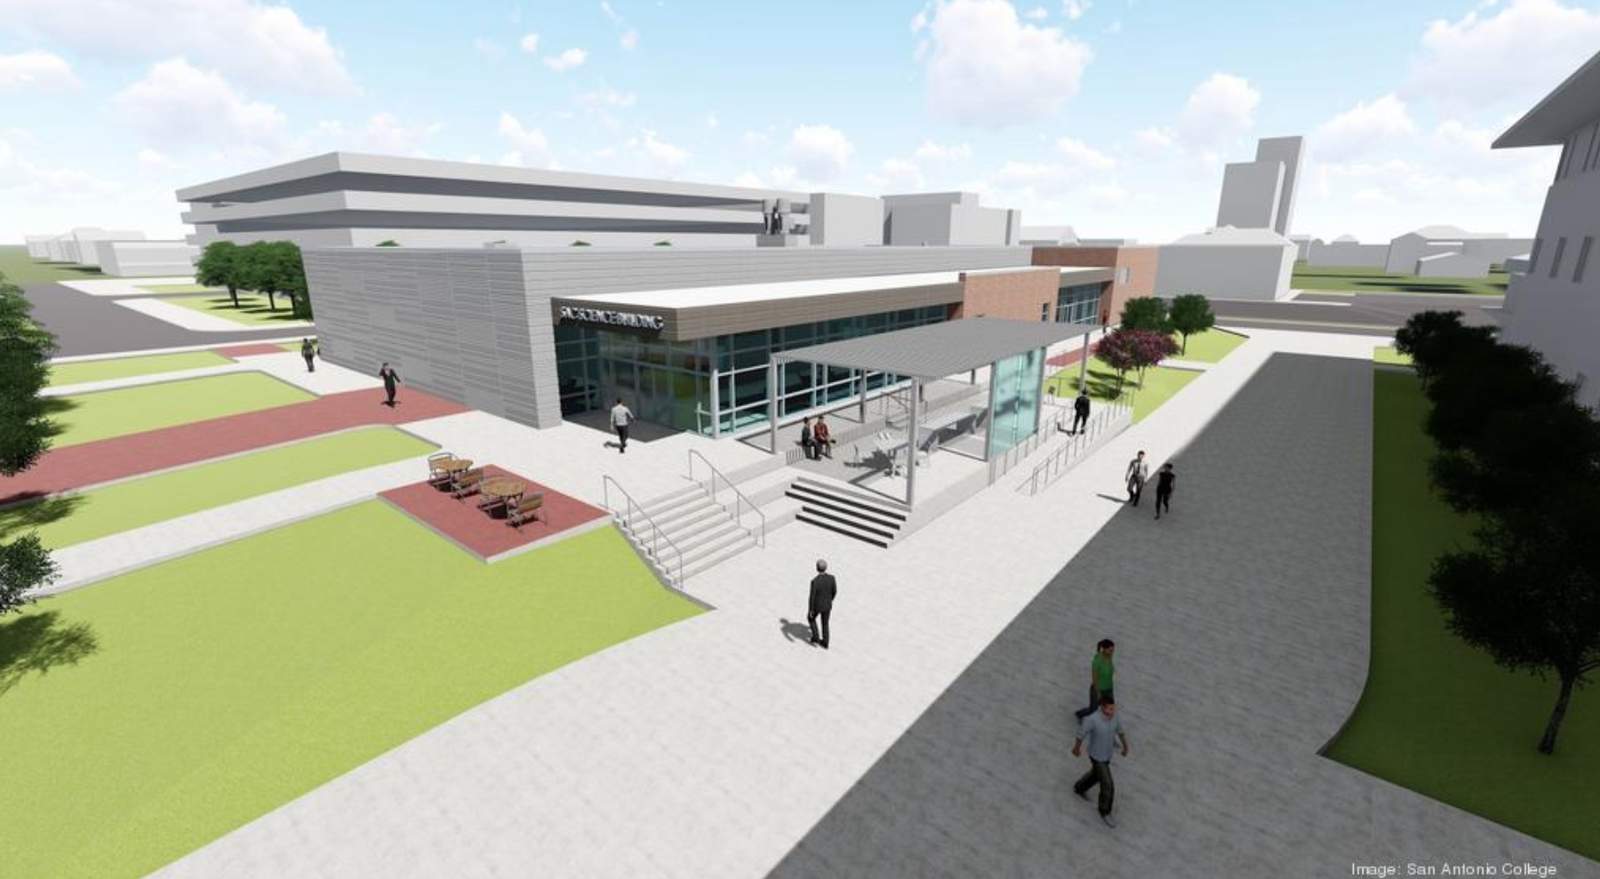 Photos: San Antonio College plans $13M science structure